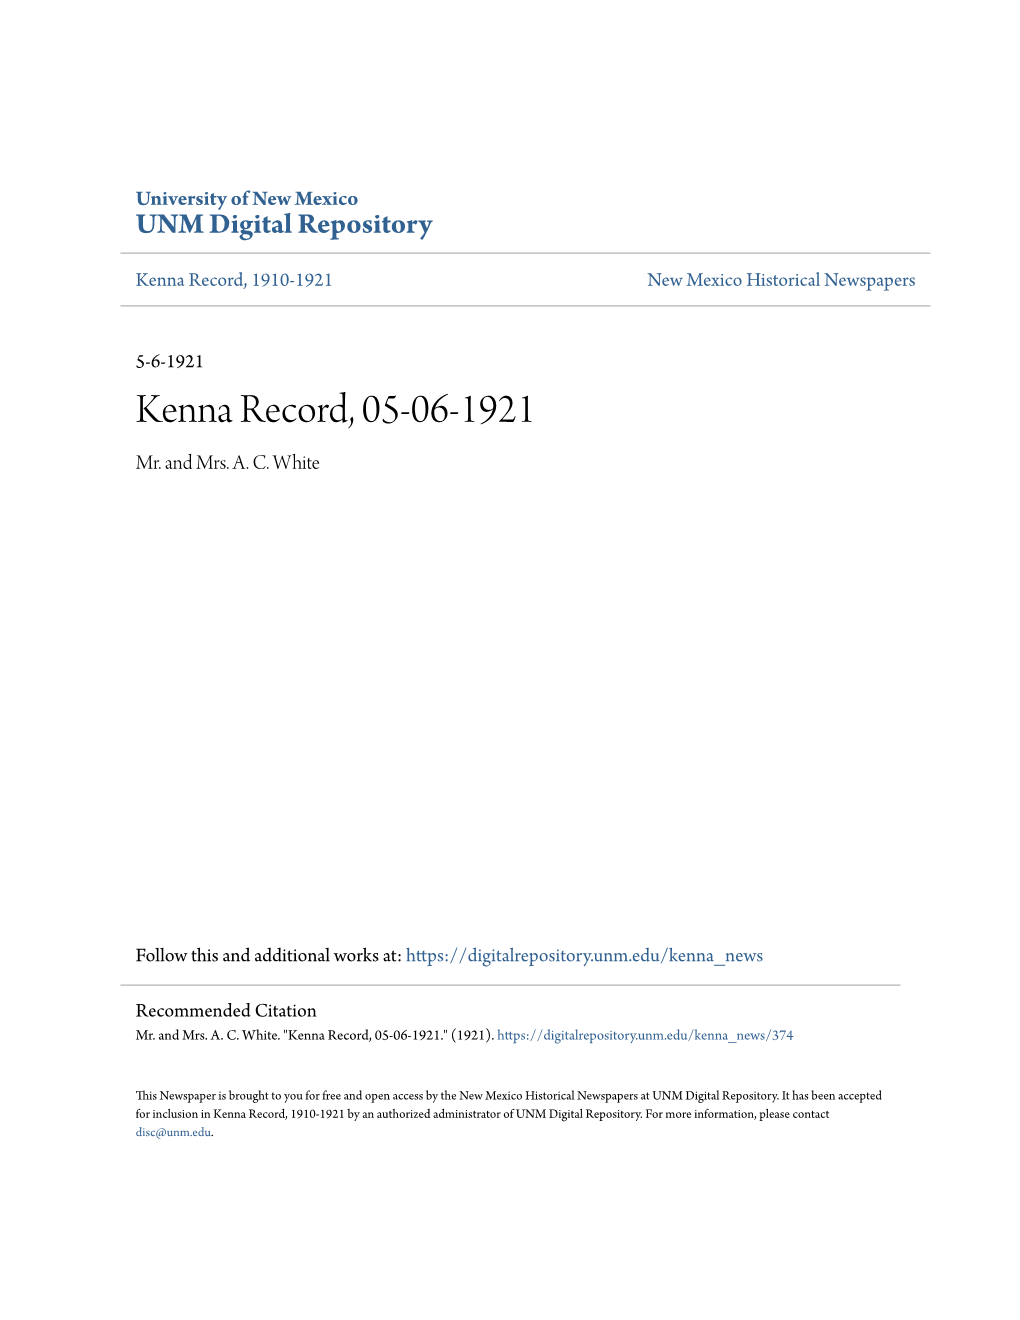 Kenna Record, 05-06-1921 Mr